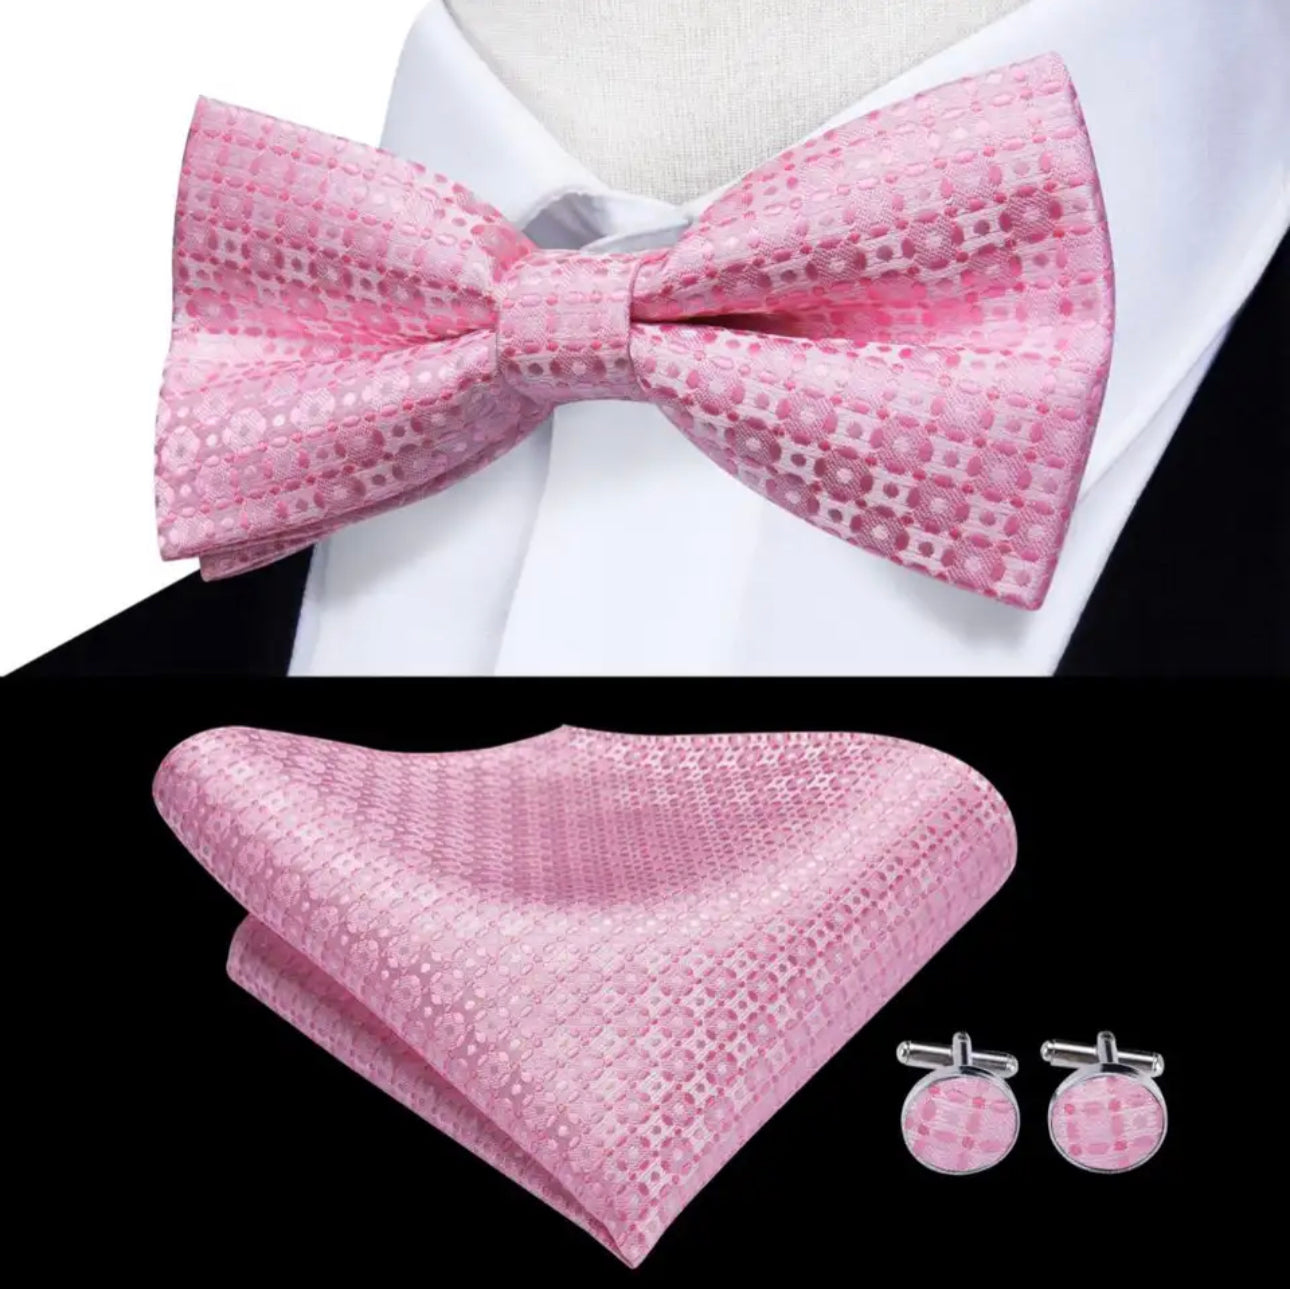 Men’s Silk Coordinated Black Bow Tie Set - Pink 0502